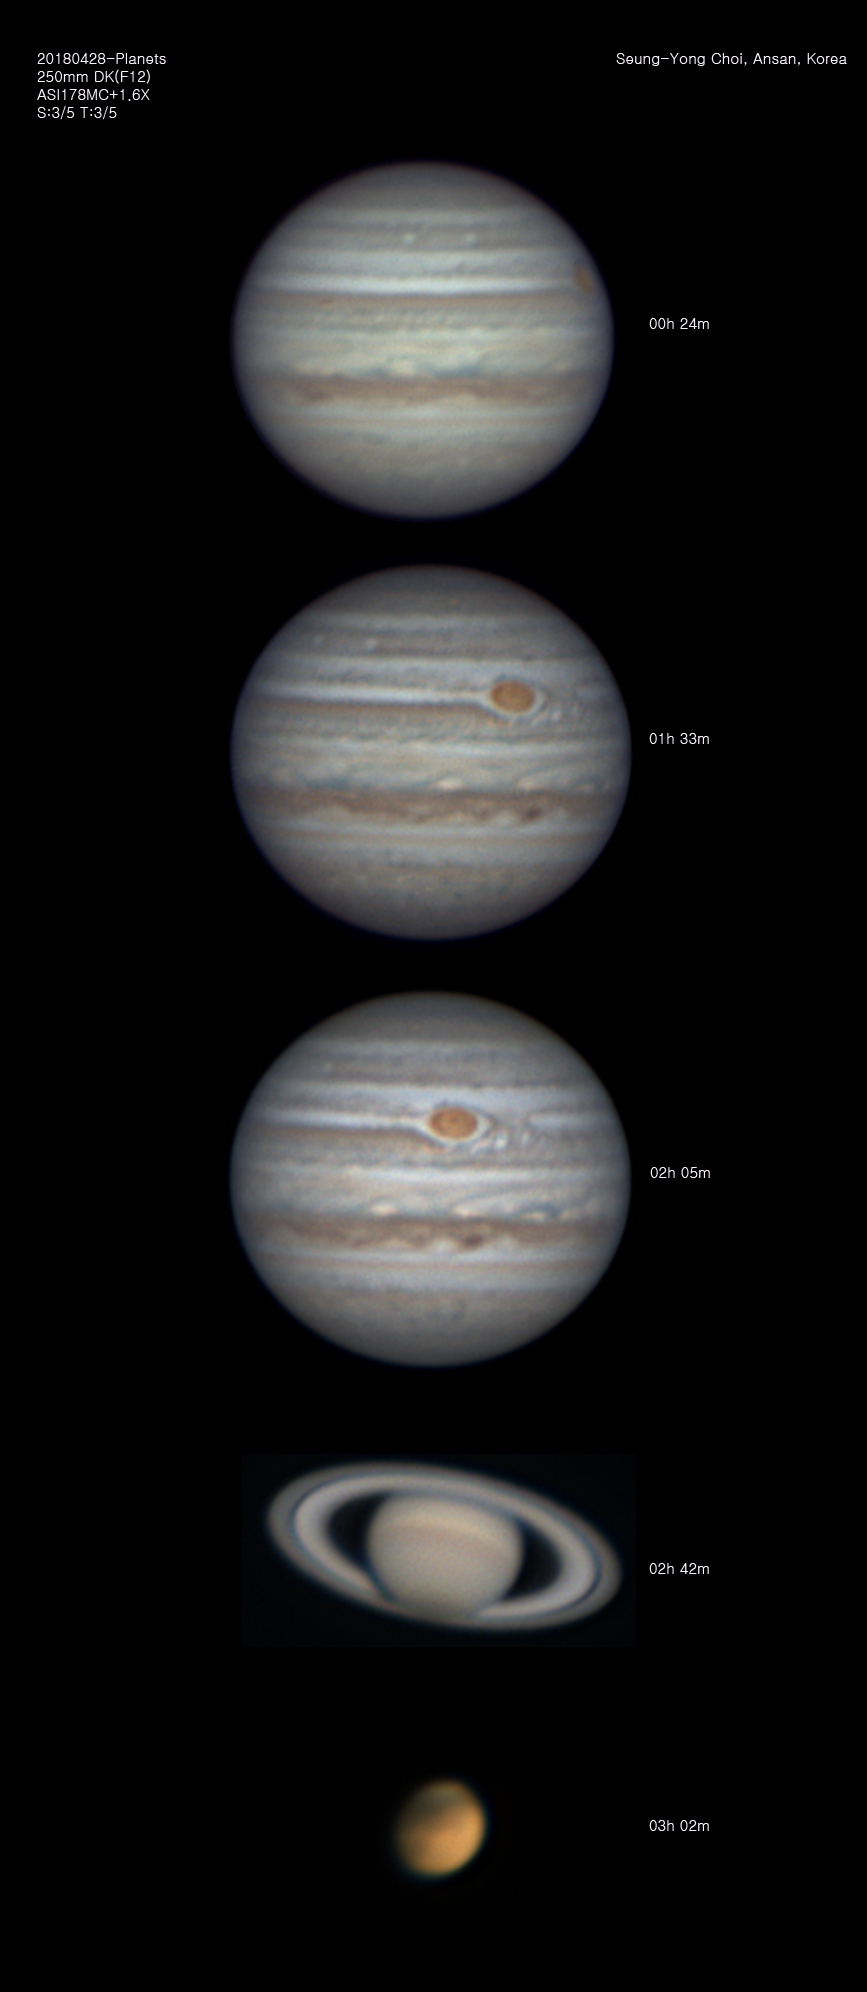 180428-planets.jpg